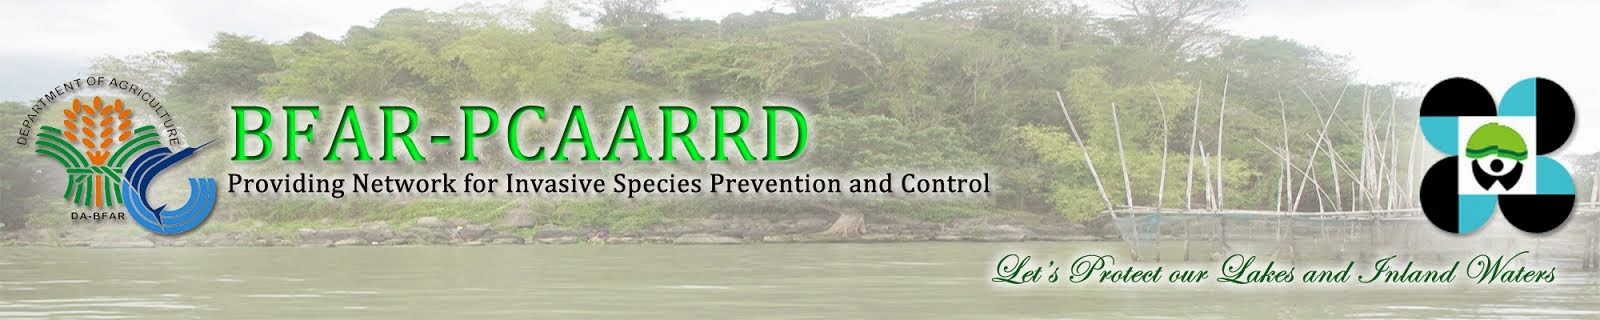 BFAR-PCAARRD Providing Network for Invasive Aquatic Species Prevention and Control